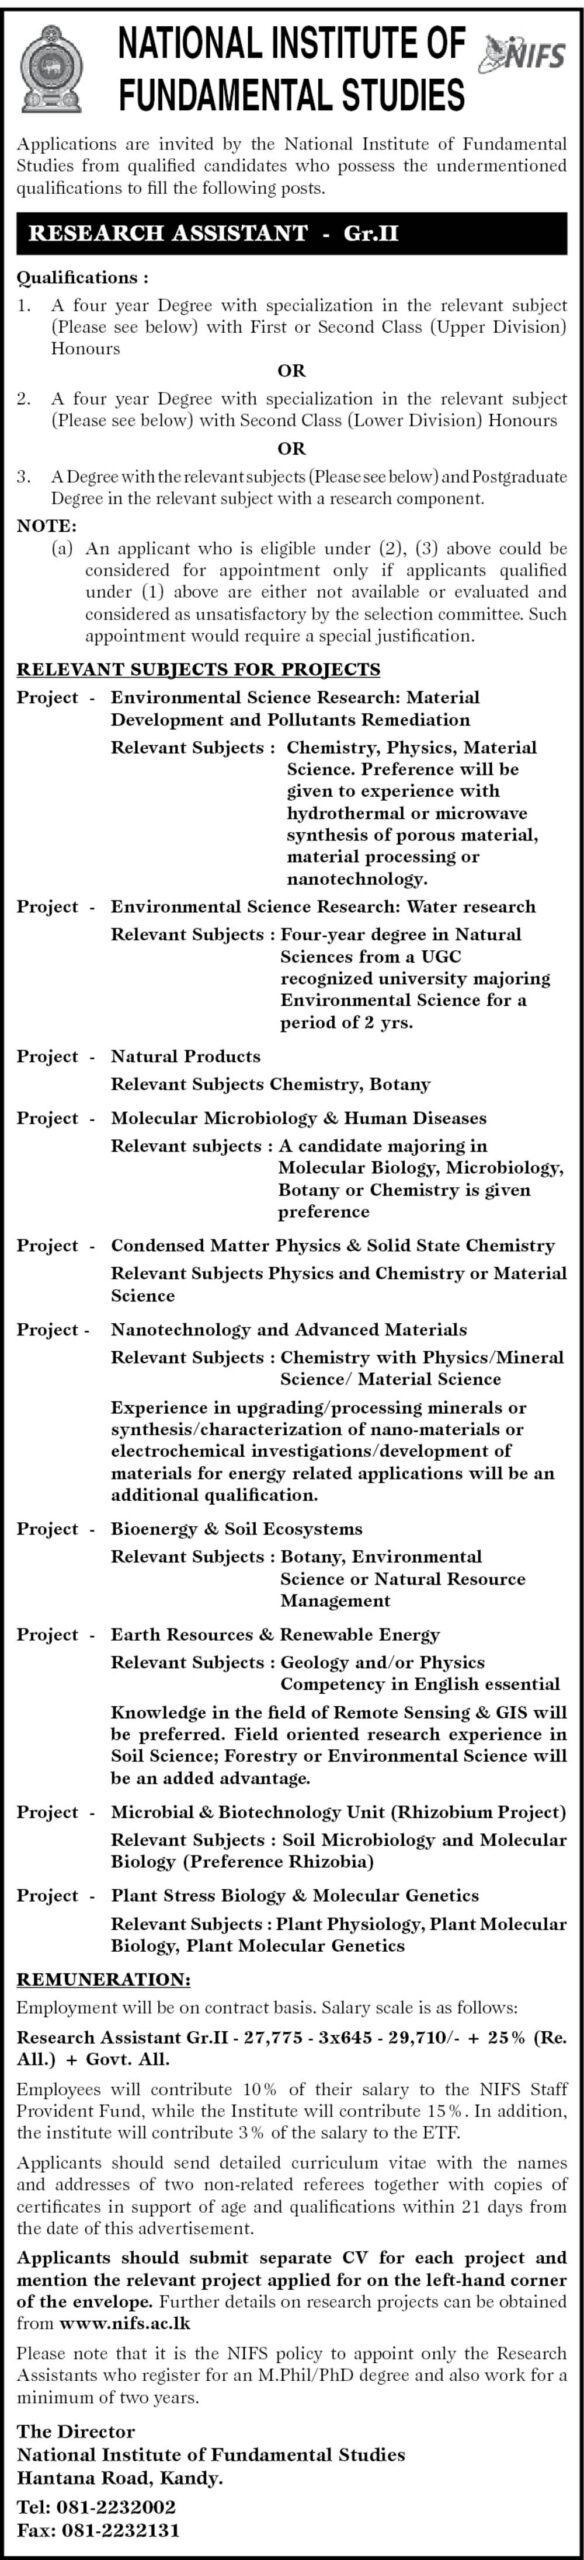 Research Assistant (Grade II) – National Institute of Fundamental Studies